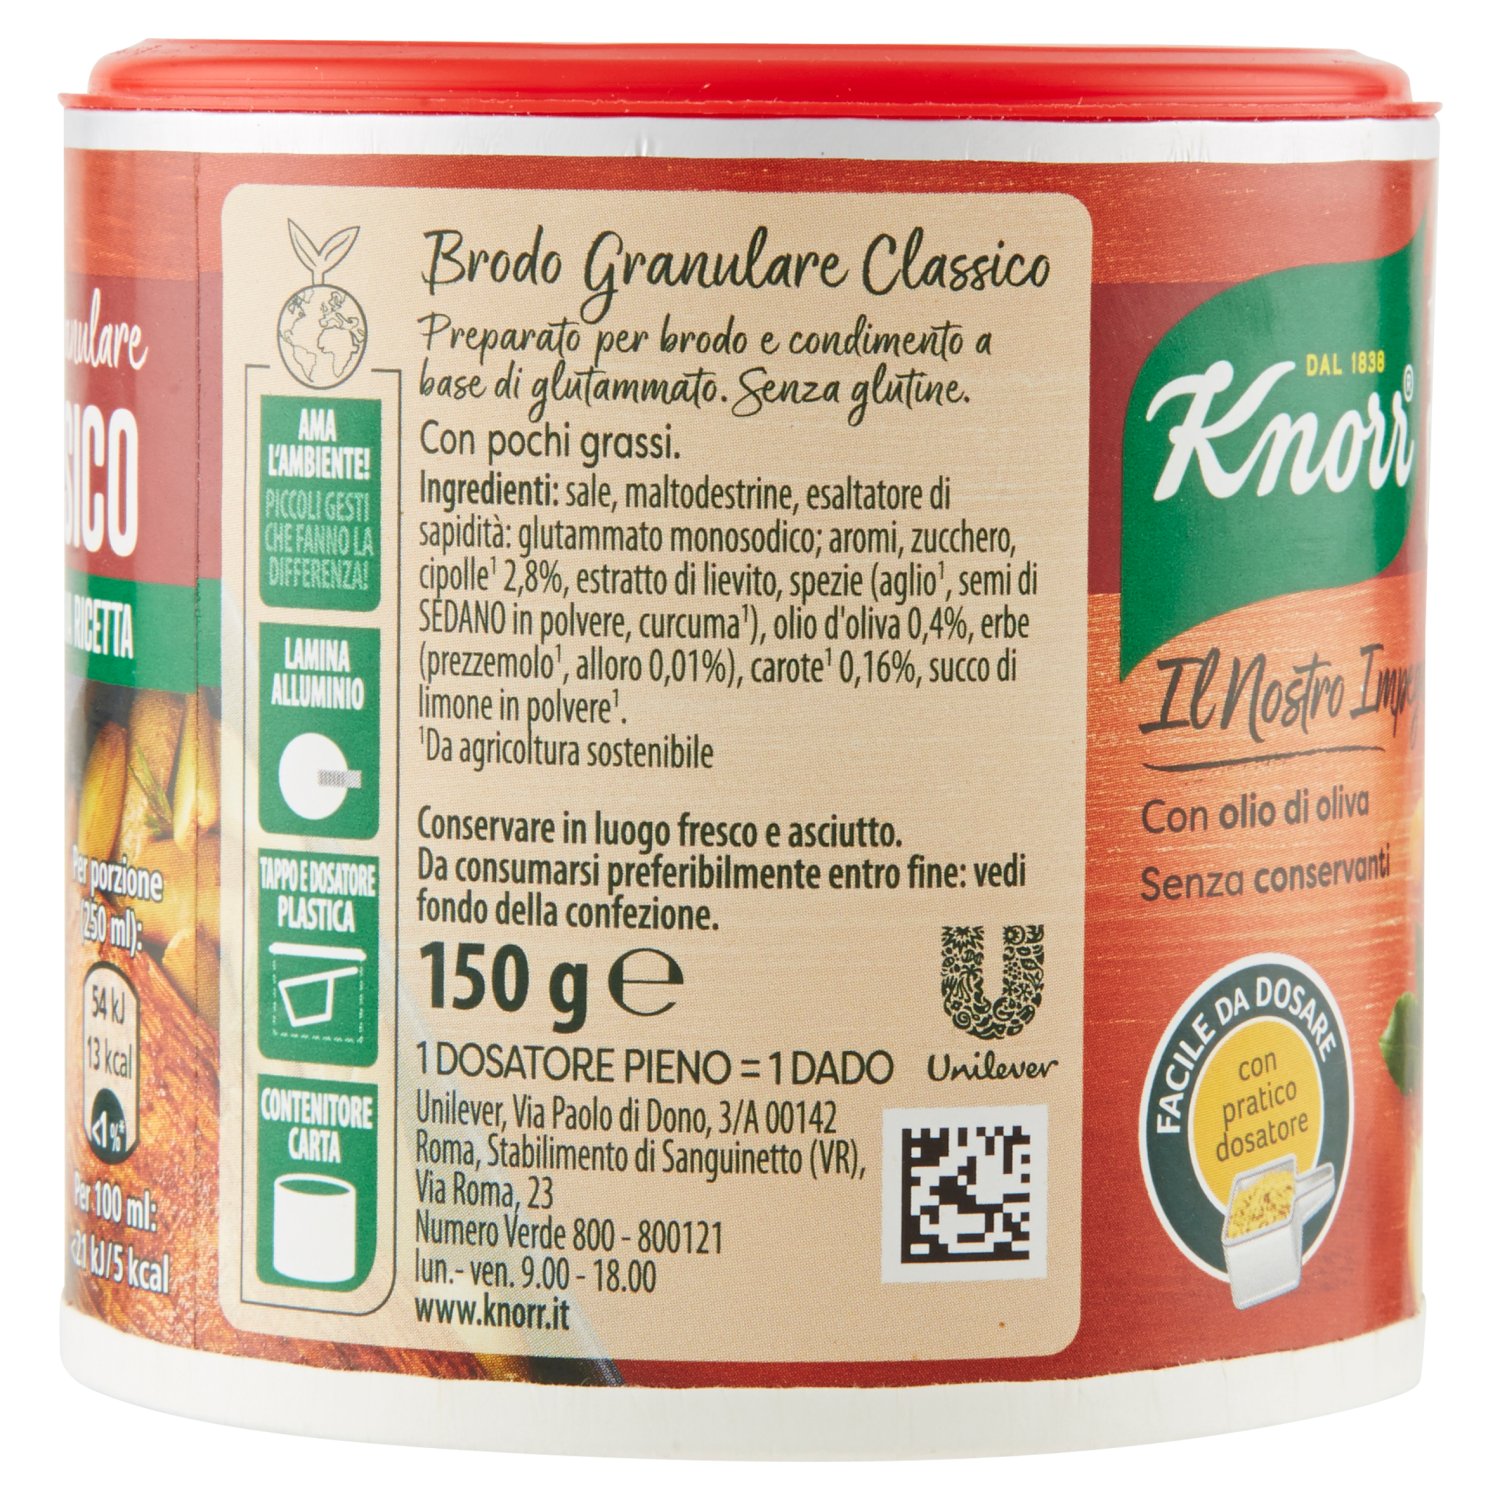 Knorr Brodo Granulare Classico 150 g